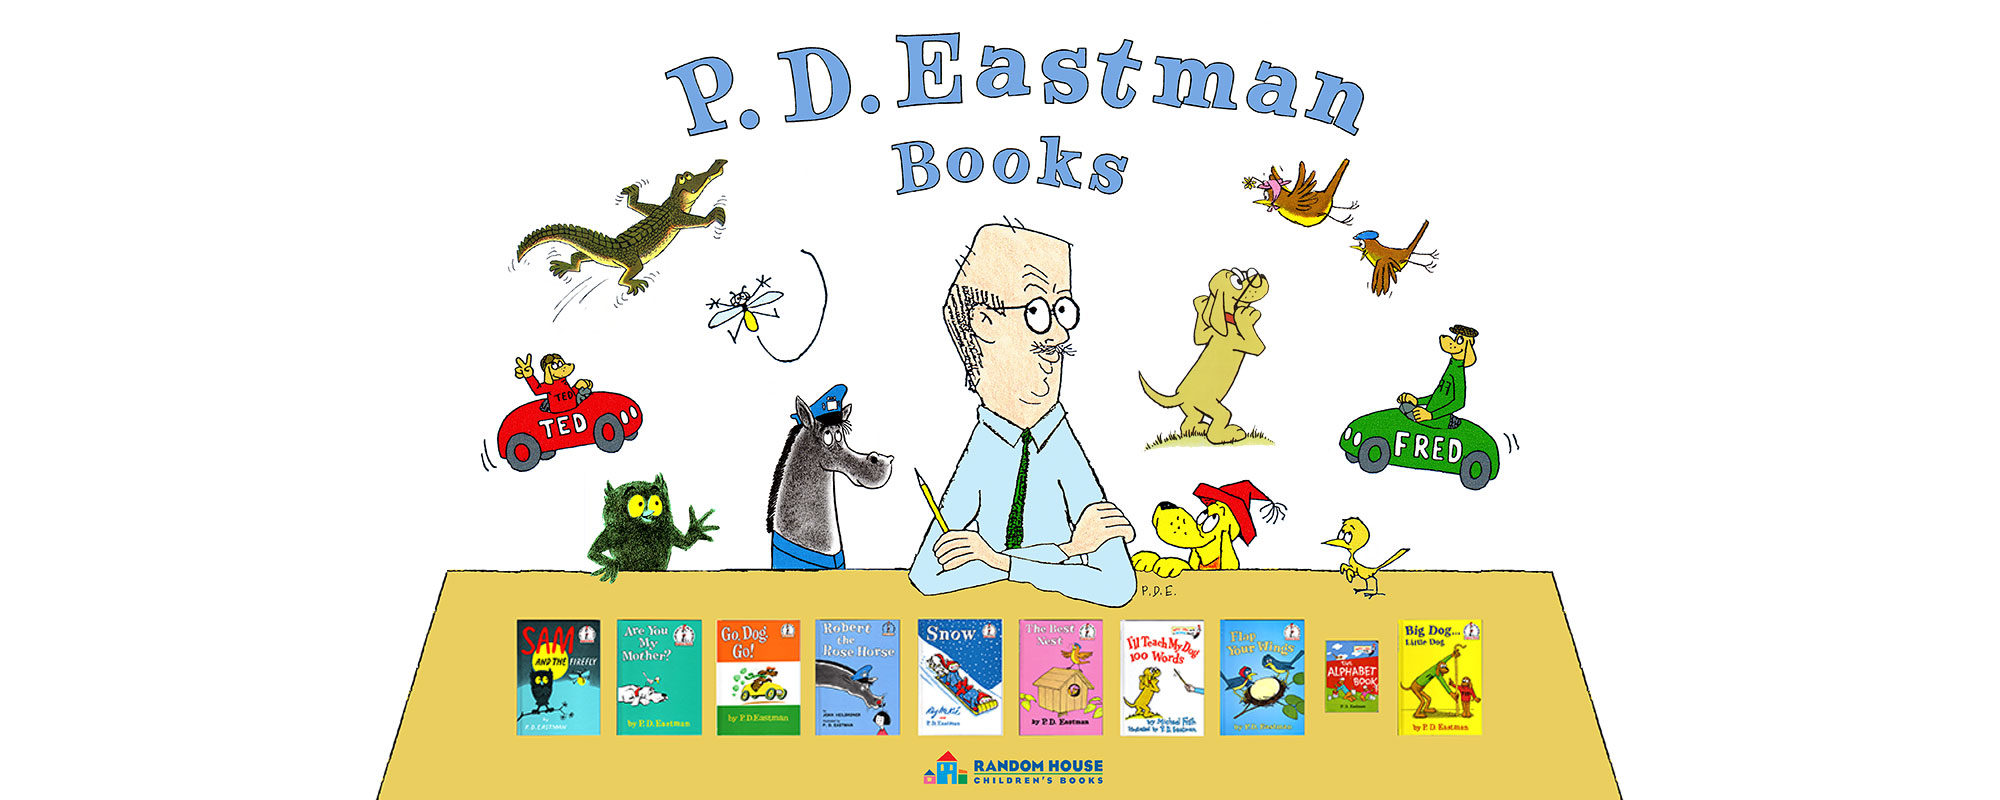 The Alphabet Book: P.D. Eastman (Board Book) - Books By The Bushel